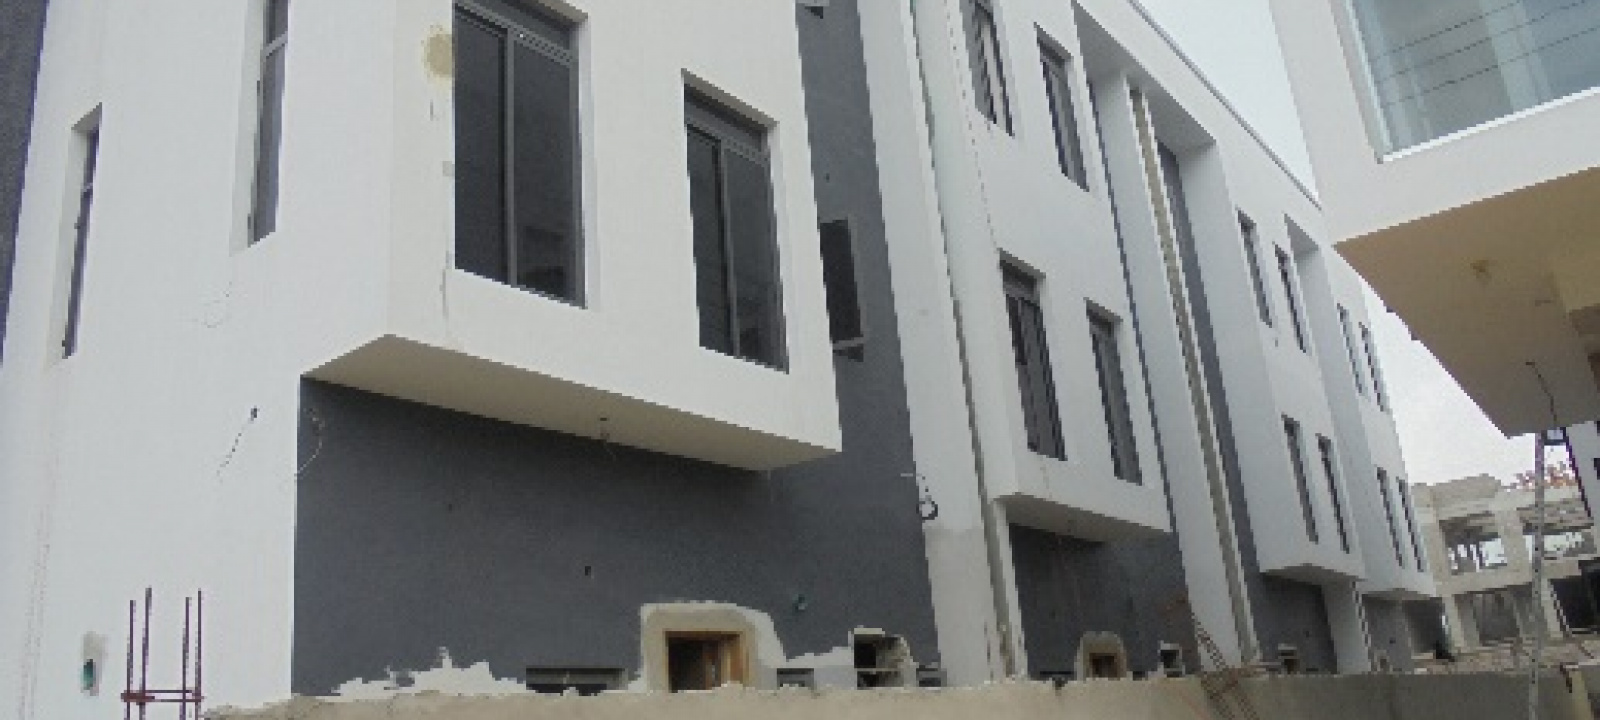 Lekki Peninsular, Lagos, ,House,For Sale,1033